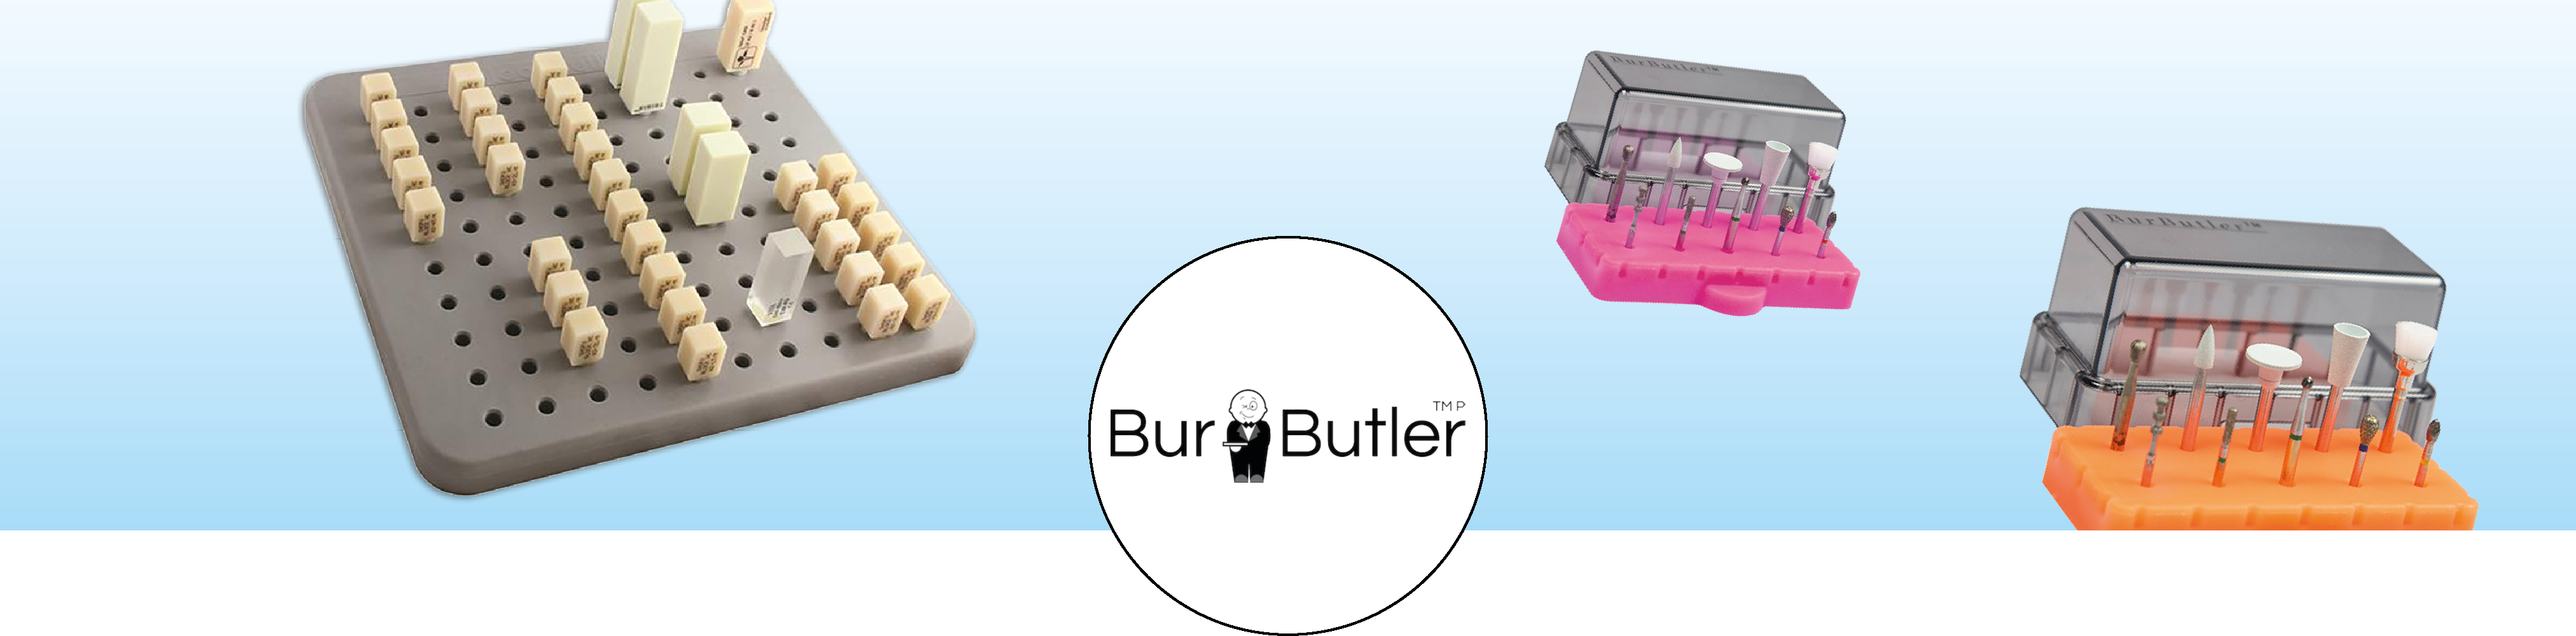 banner_bur_butler